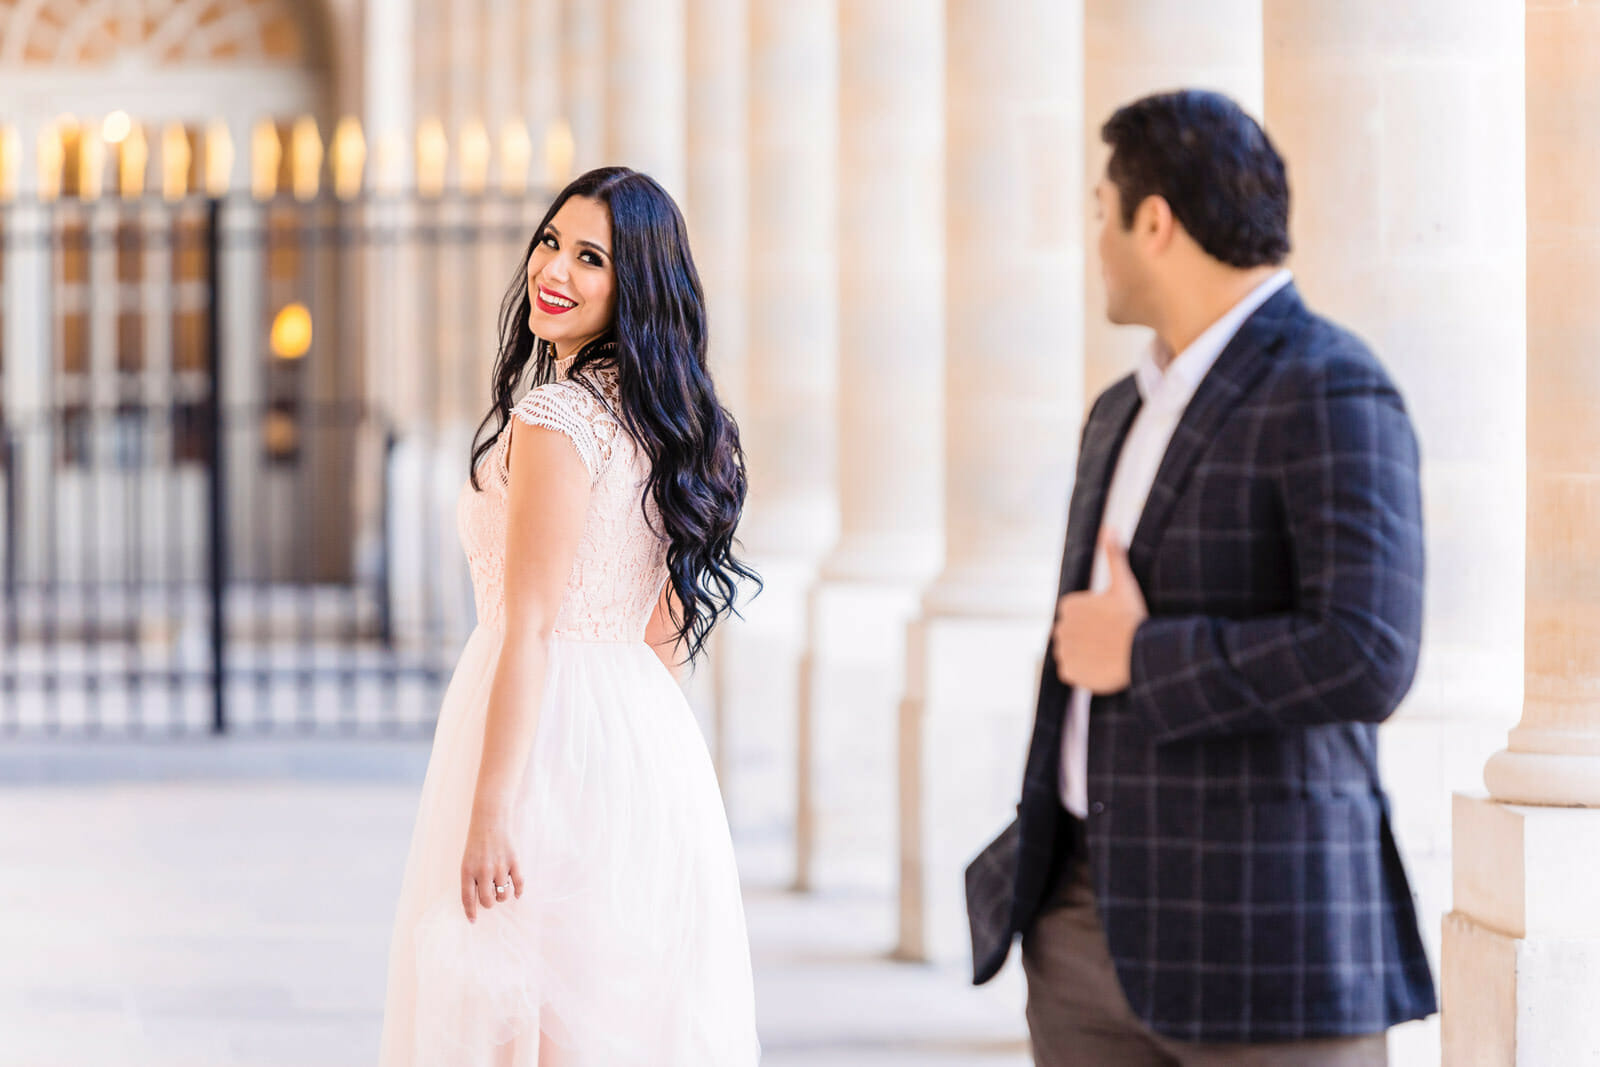 Romantic Paris engagement photos at Palais Royal